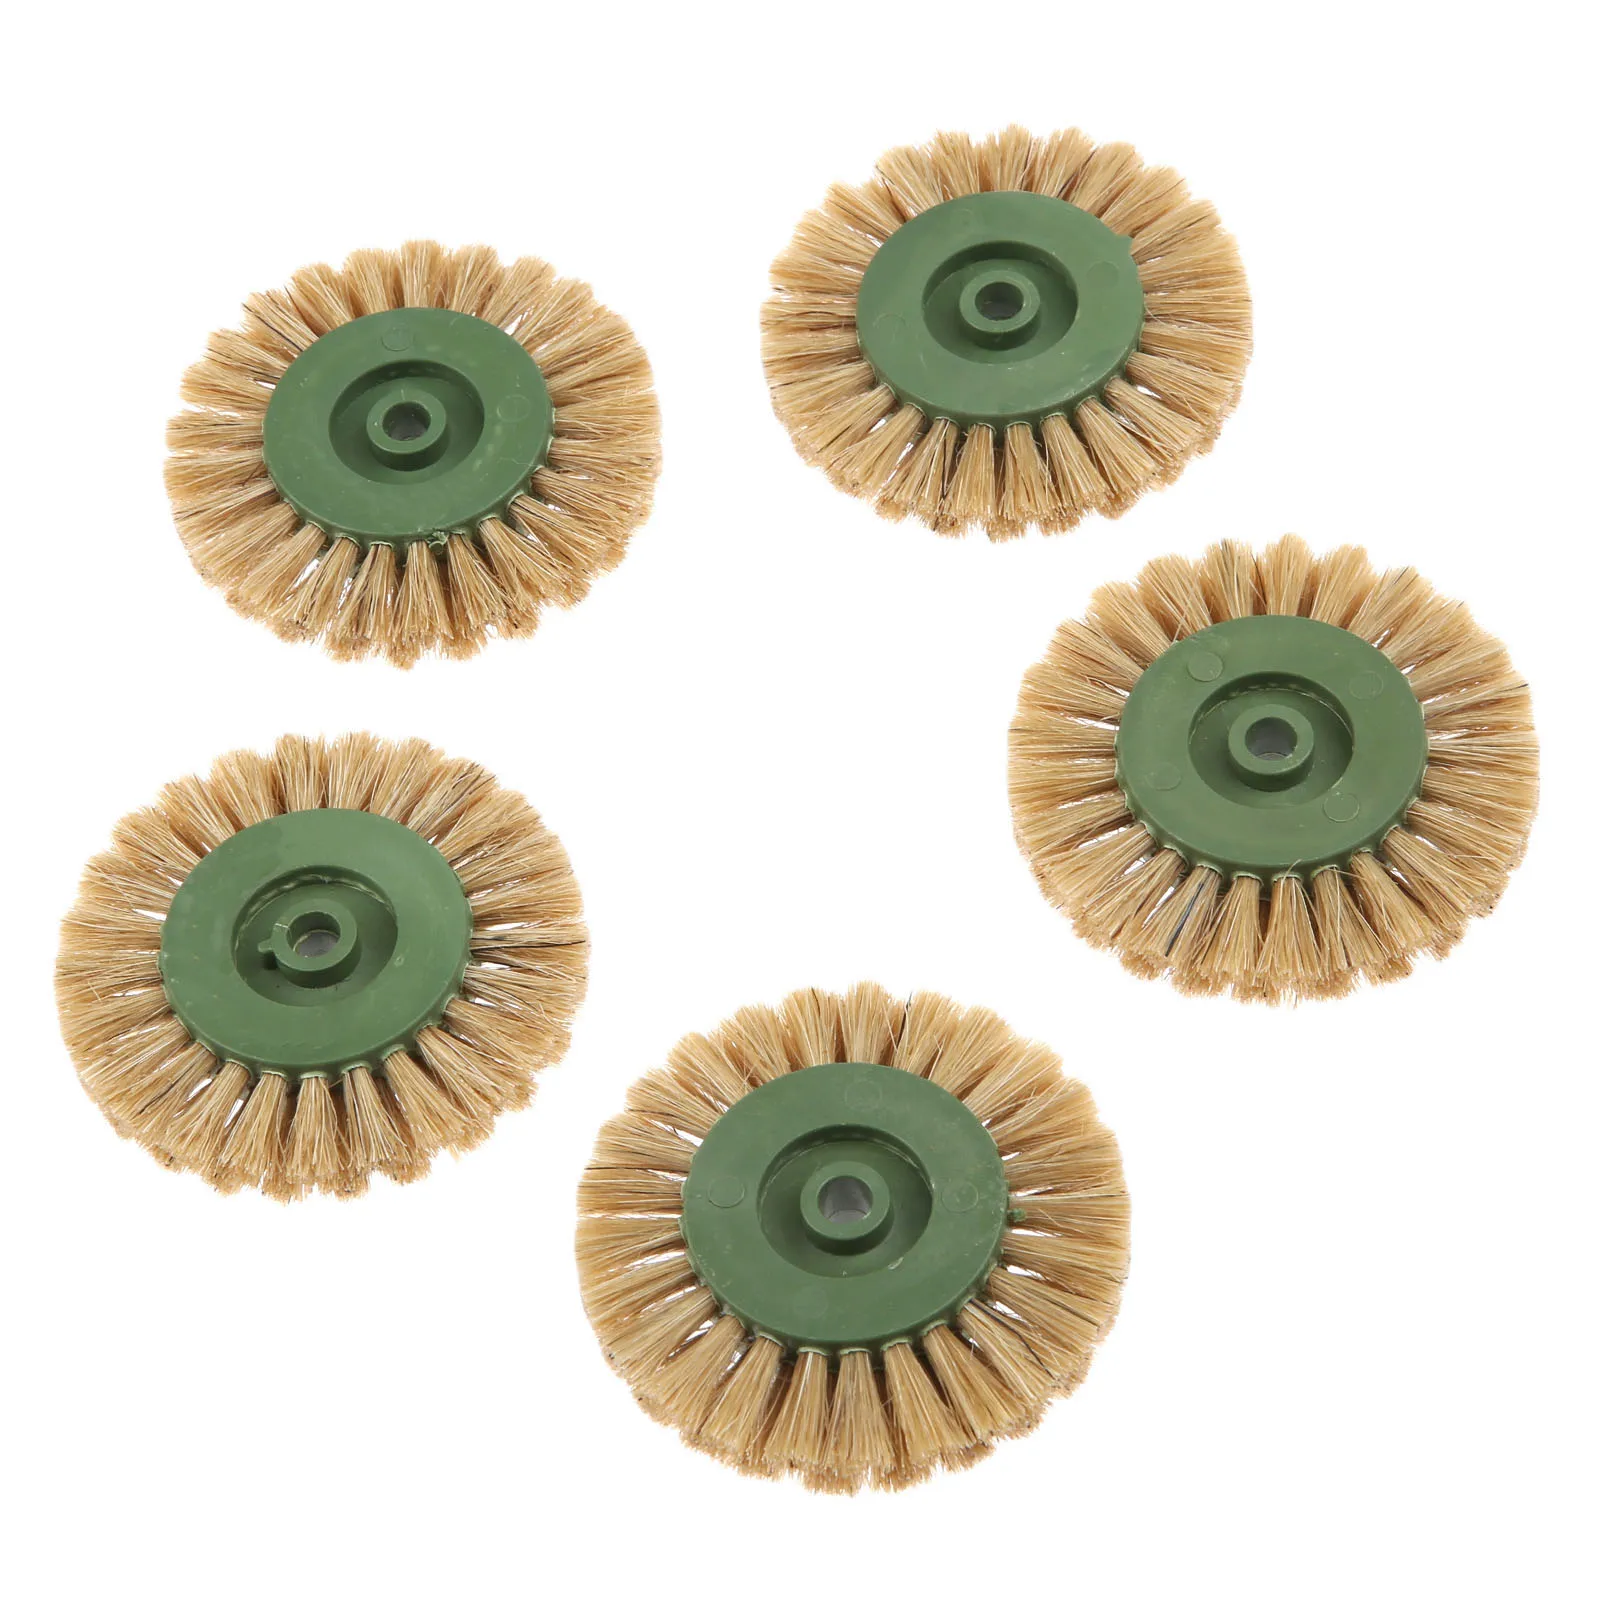 DRELD 5Pcs Dremel Accessories 70mm Grinding Head Abrasive Wheel Yellow Buffing Polishing Wheels for Dremel Rotary Tool